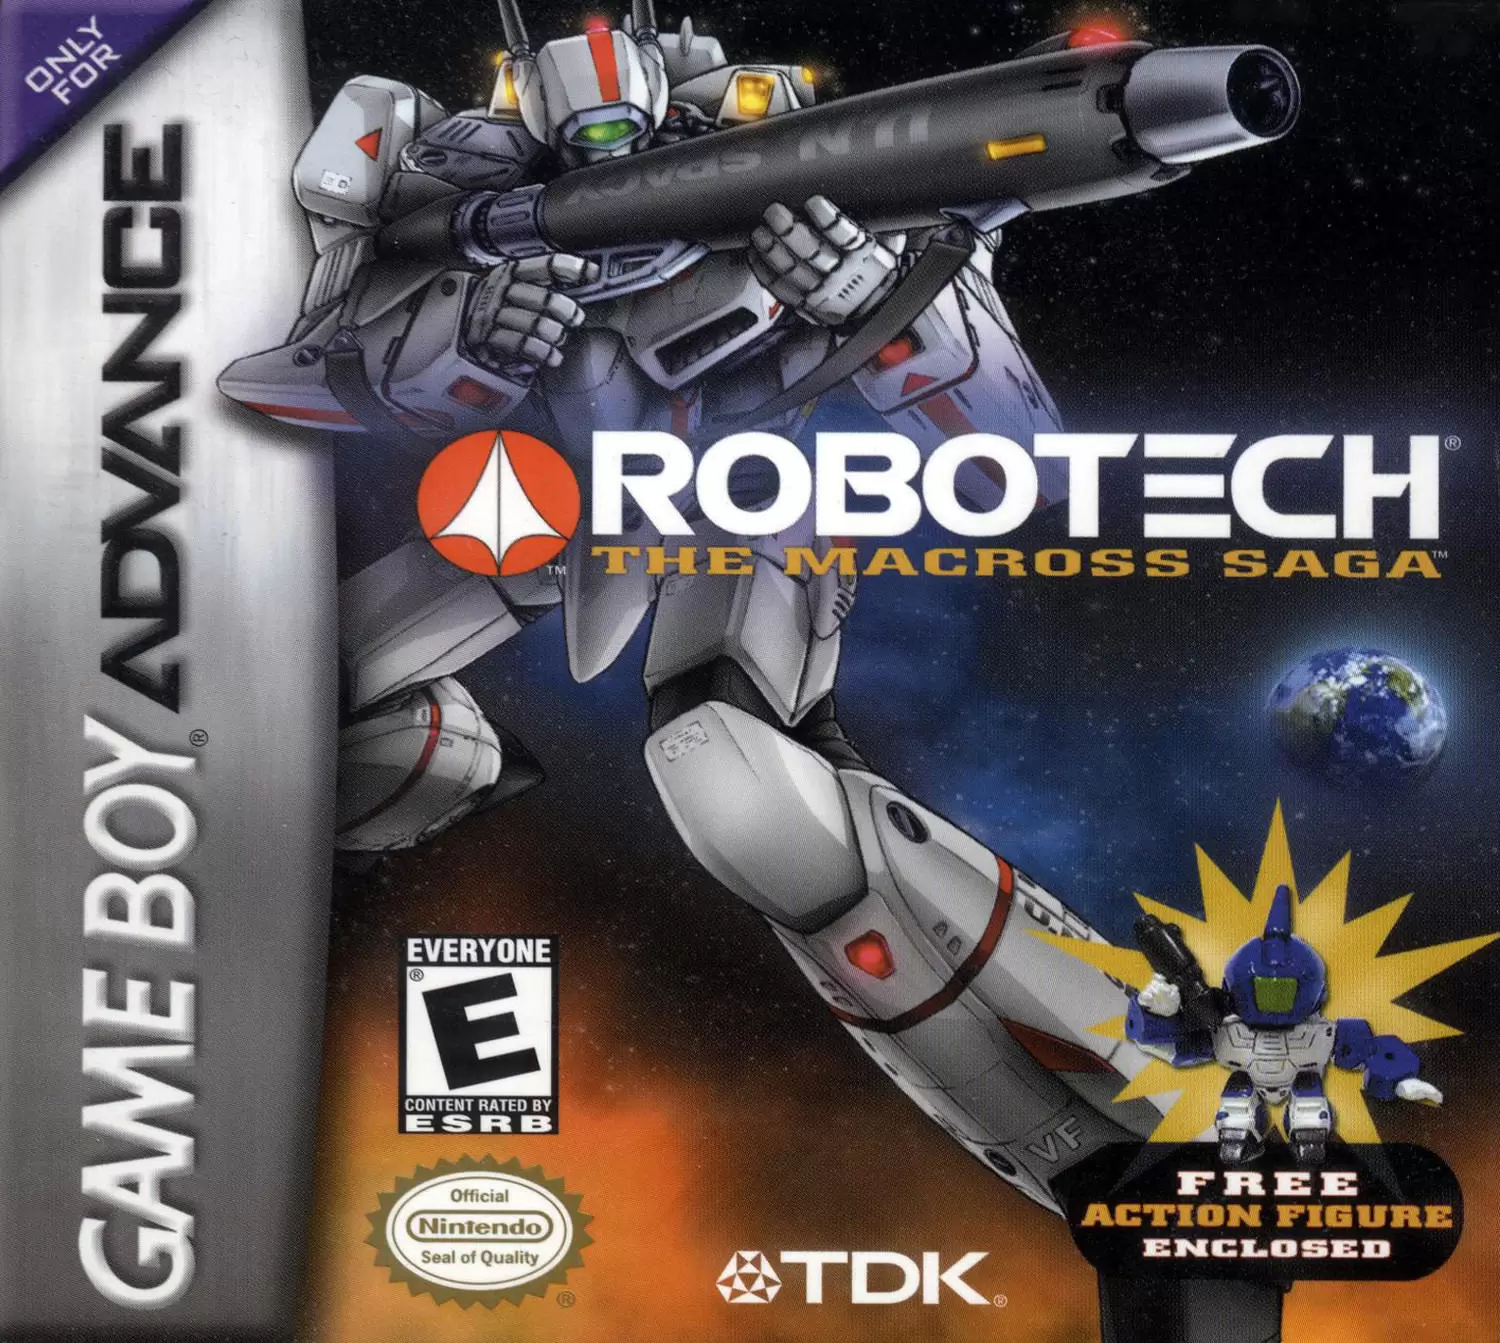 Game Boy Advance Games - Robotech: The Macross Saga